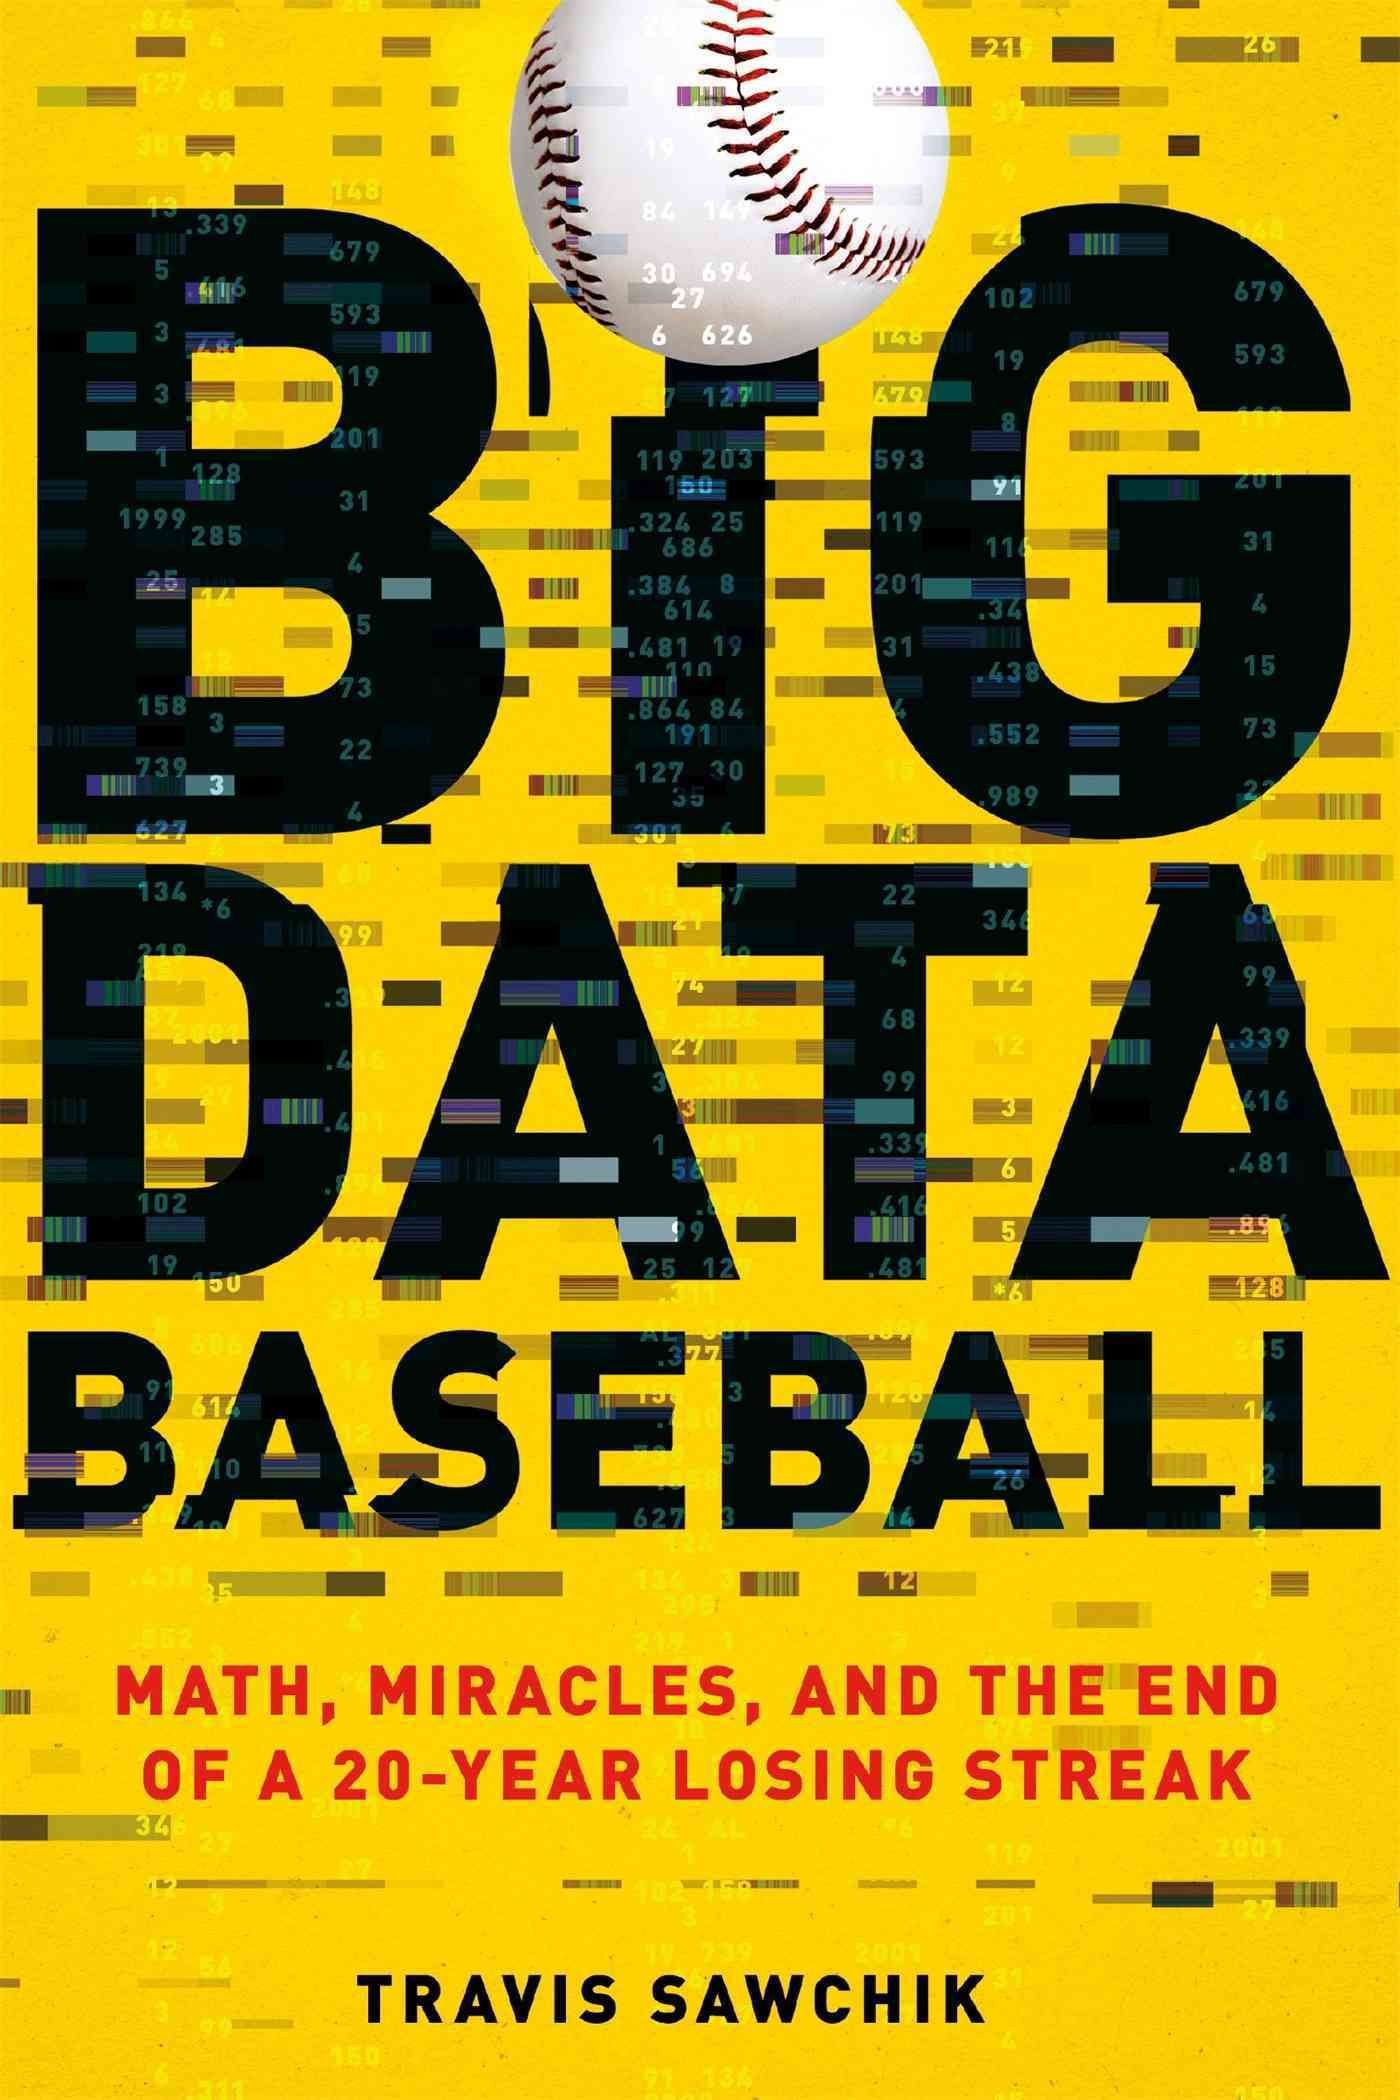 Big Data Baseball